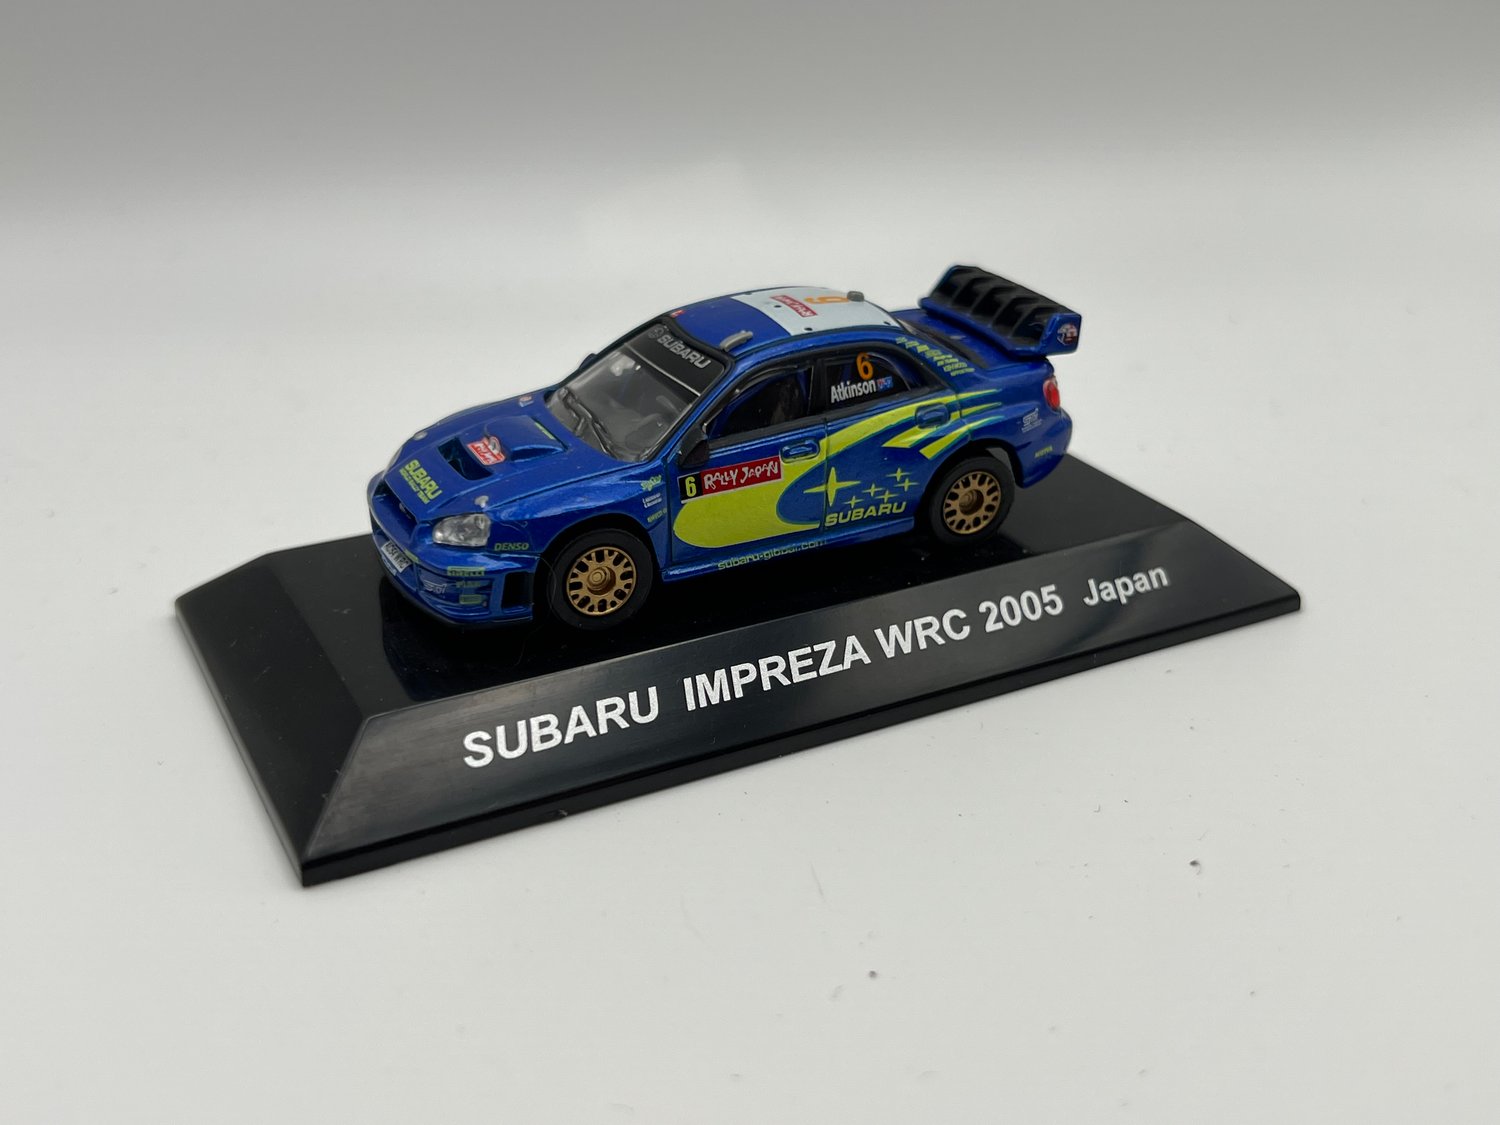 CM's Subaru Impreza WRC 2005 Japan 